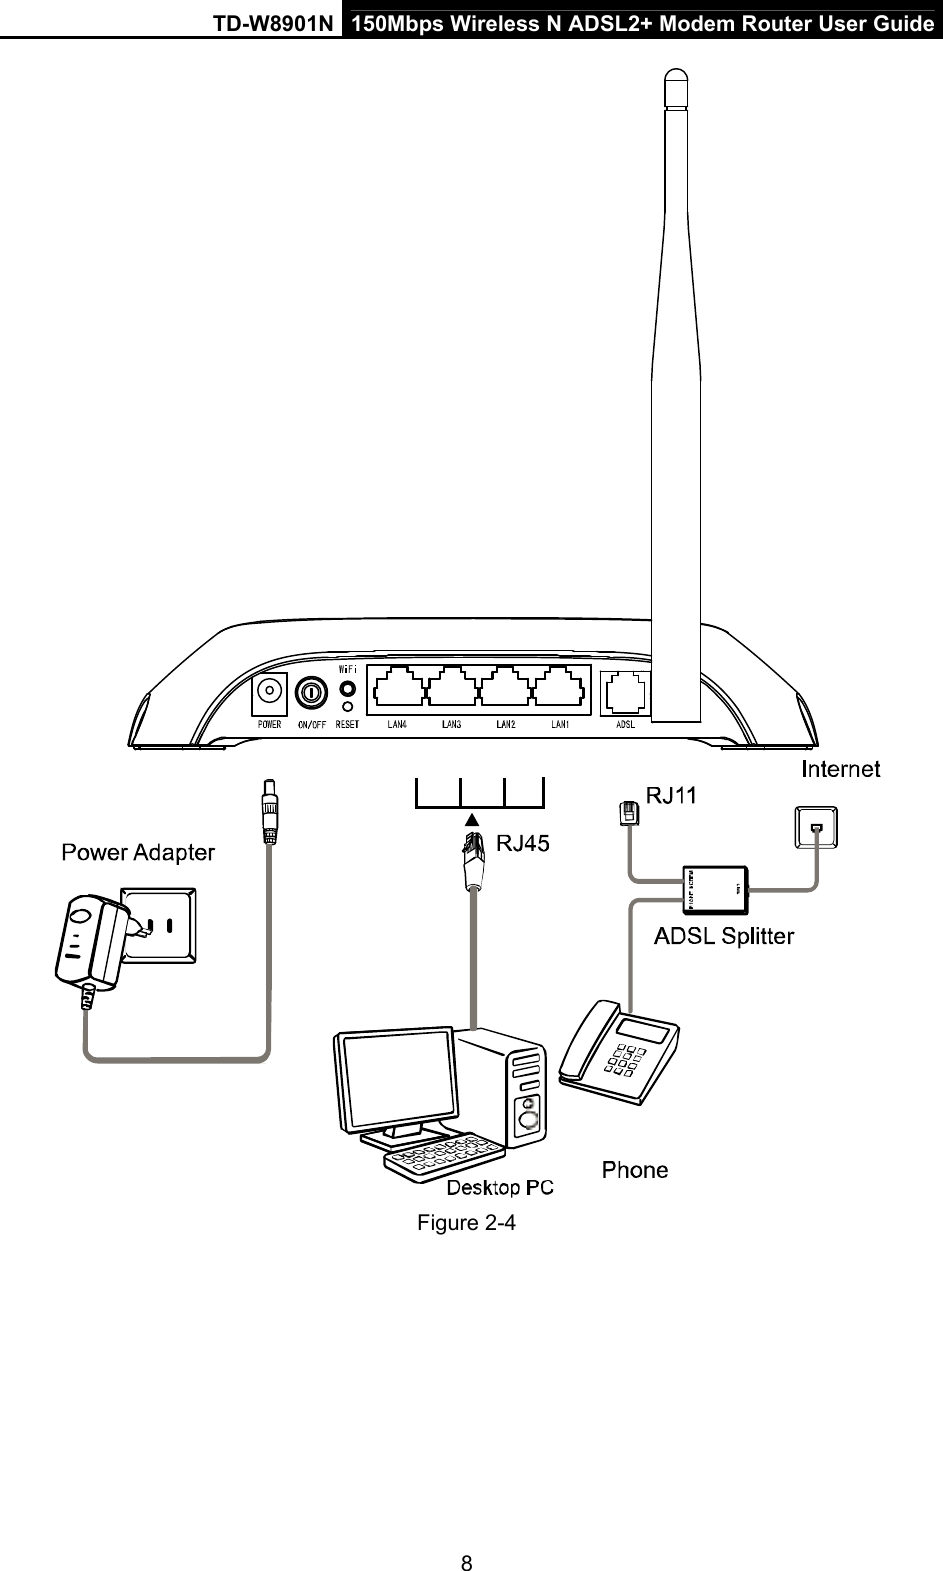 TD-W8901N  150Mbps Wireless N ADSL2+ Modem Router User Guide 8  Figure 2-4 